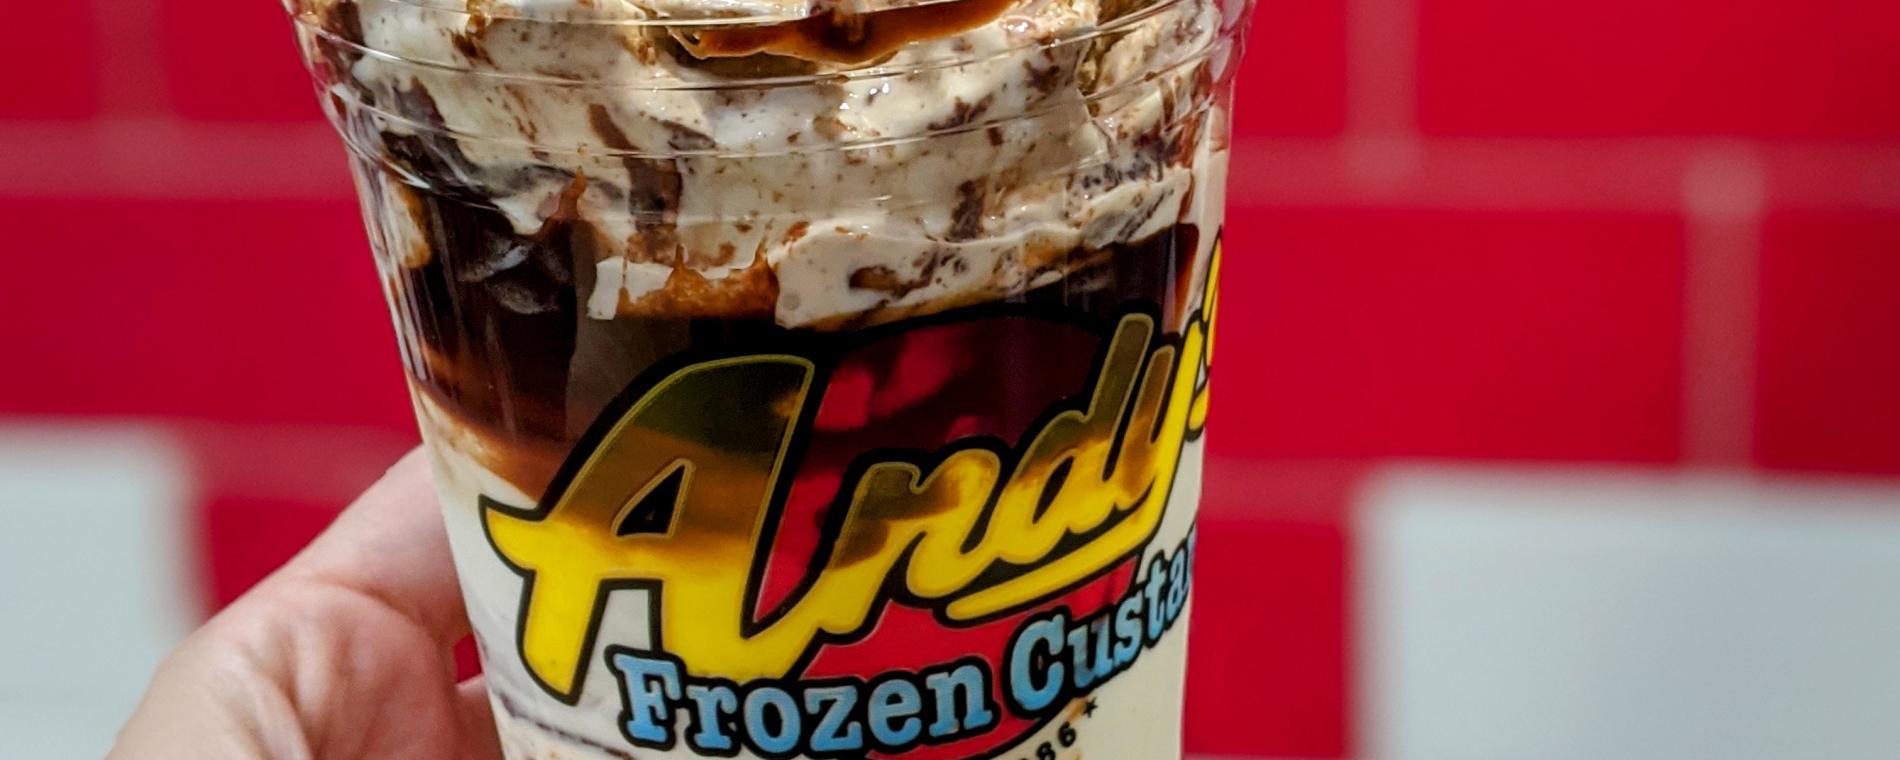 Andy's Frozen Custard partner provided Visit Wichita 6